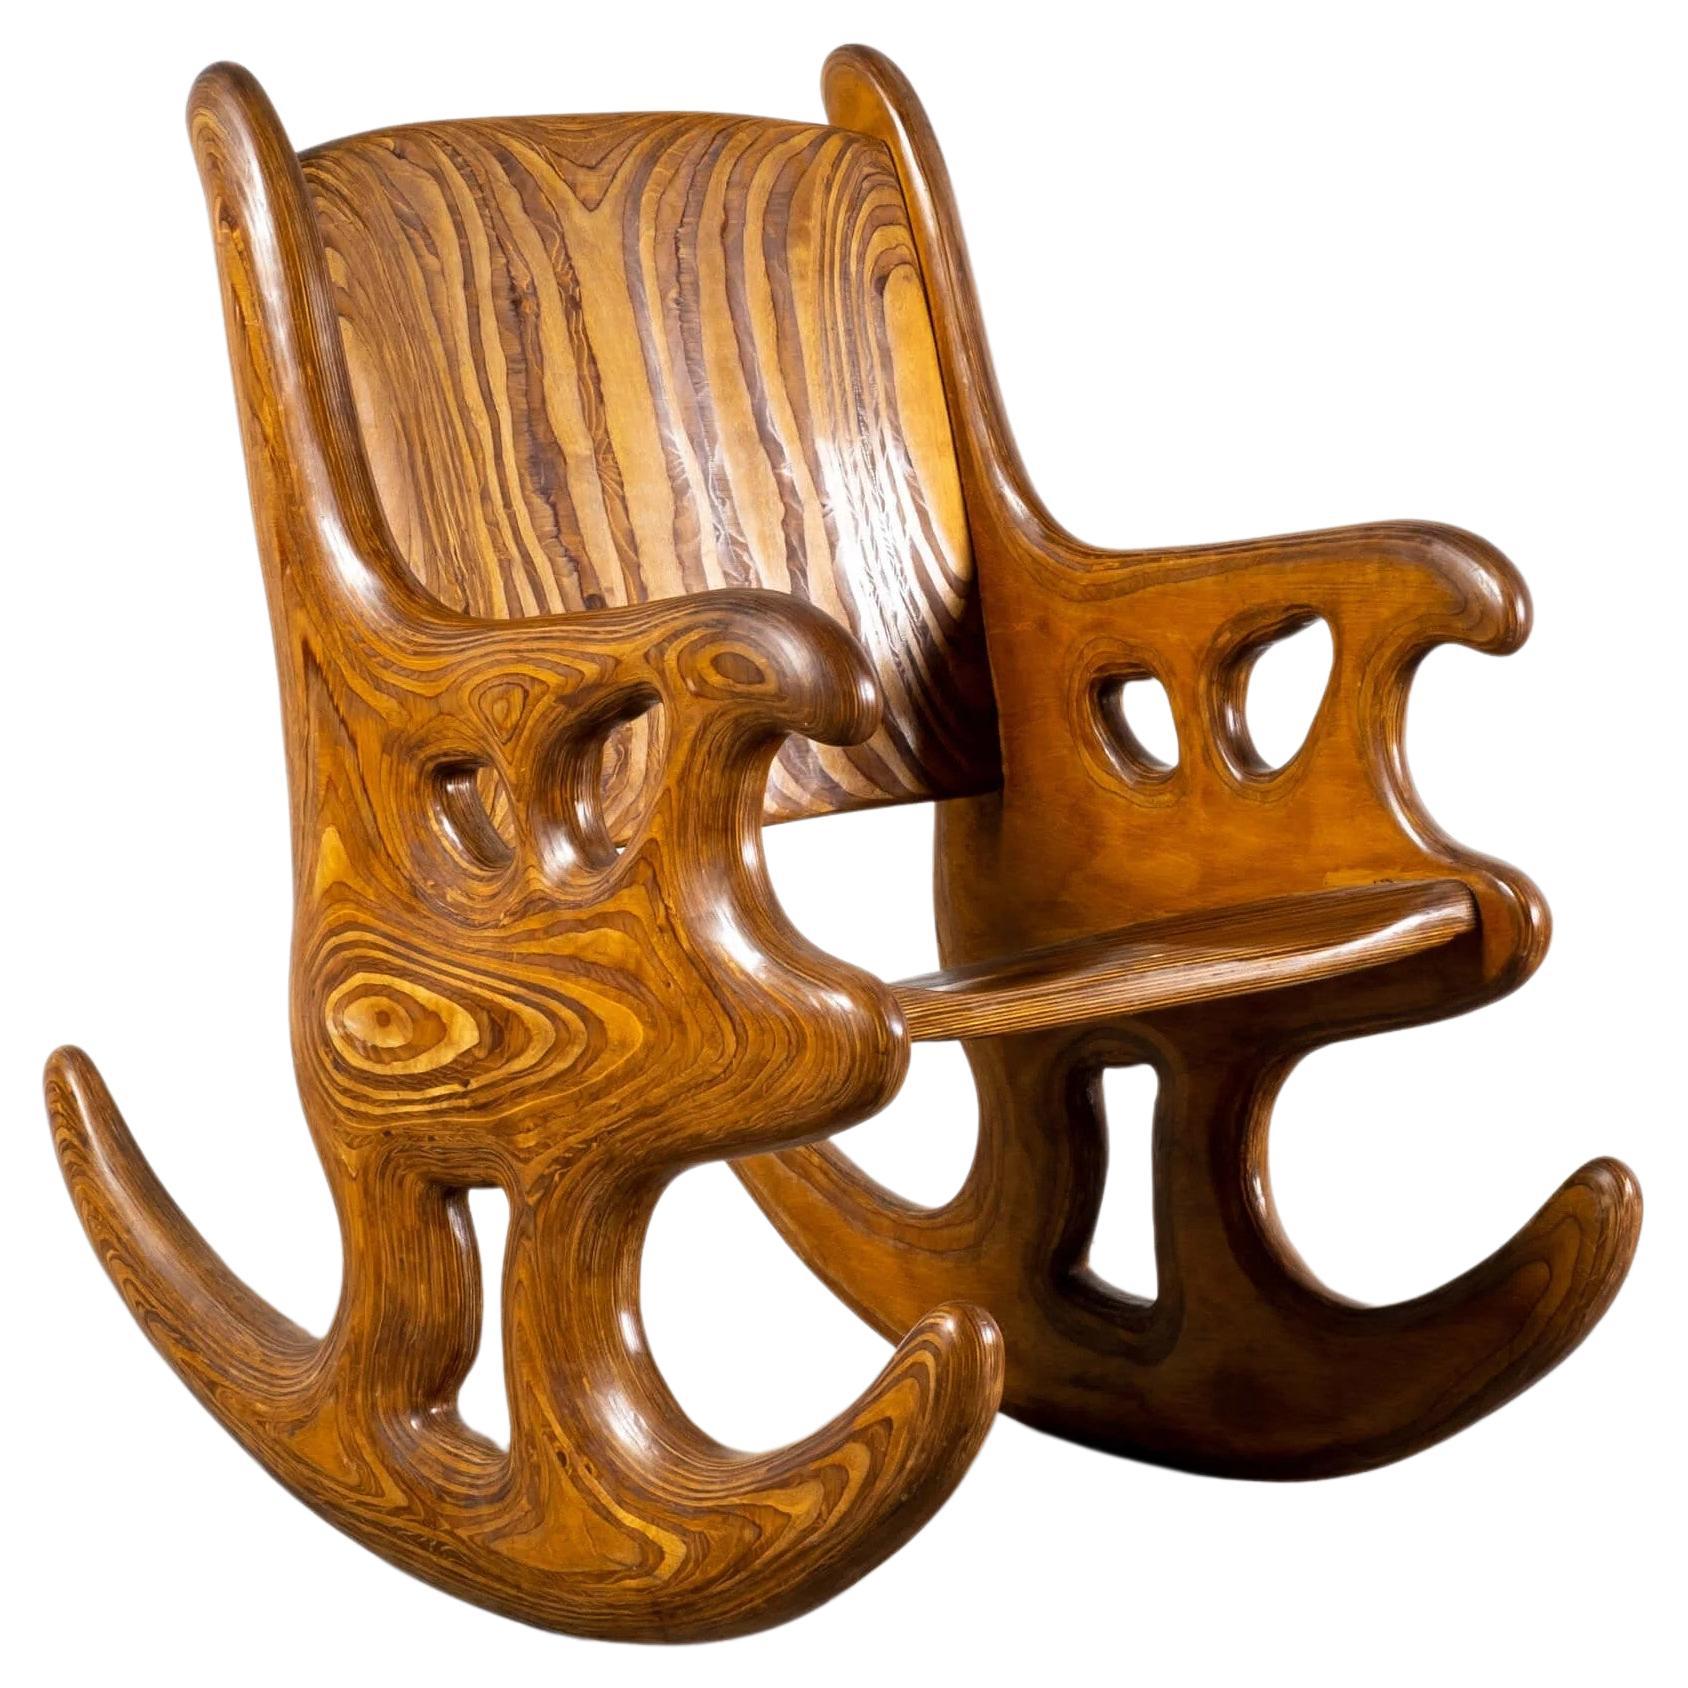 Studio Made Laminated Wood Rocking Chair by Douglas Hackett